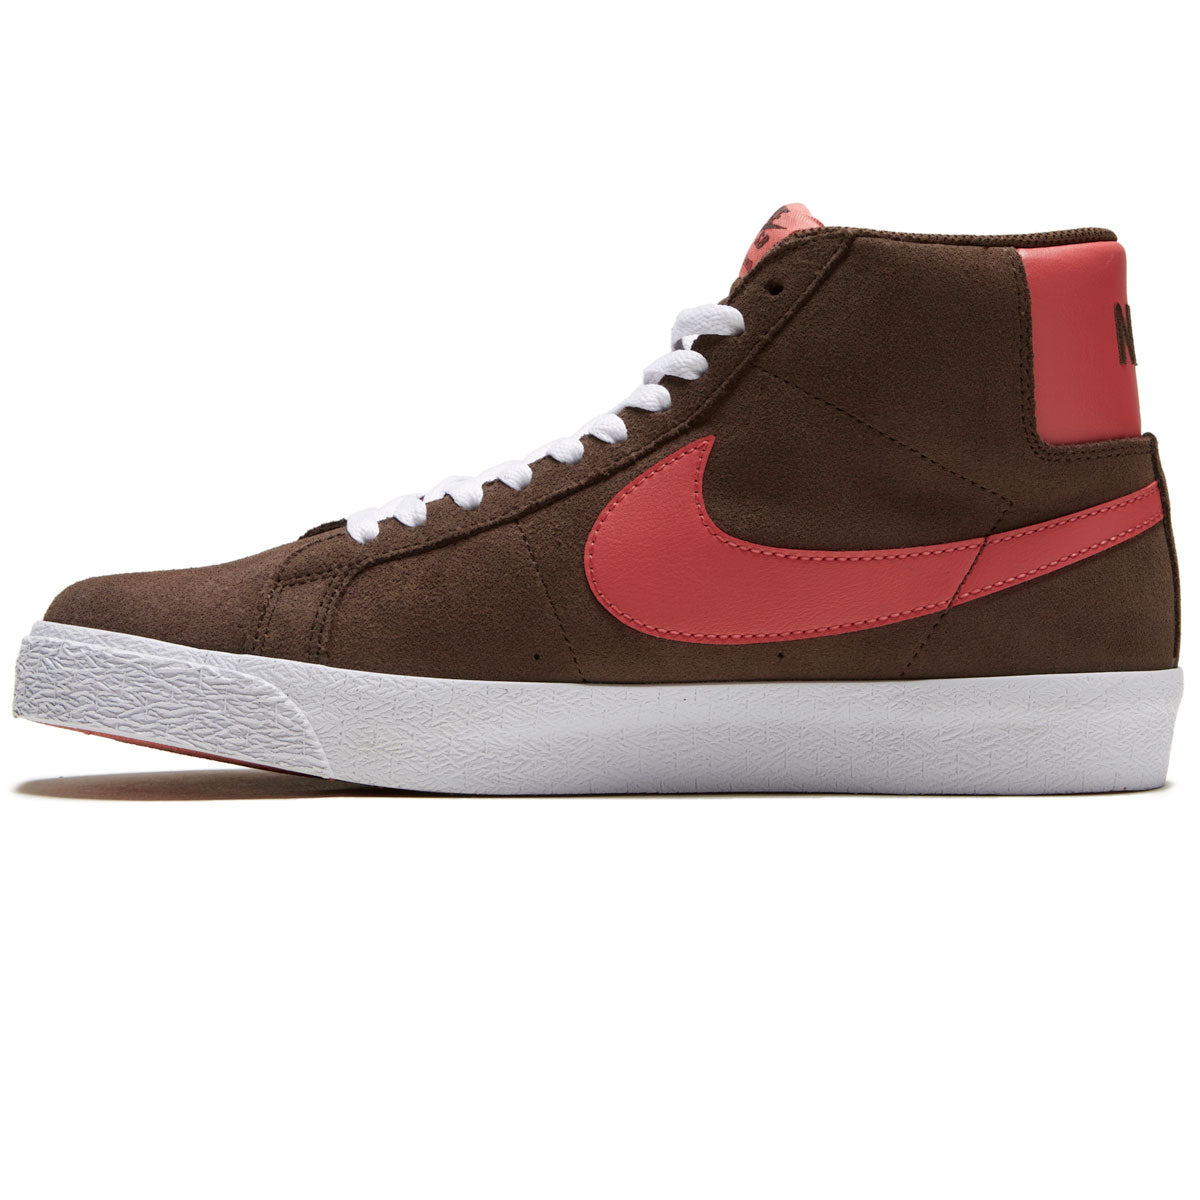 Nike SB Zoom Blazer Mid Shoes - Baroque Brown/Adobe/Baroque Brown/White image 2